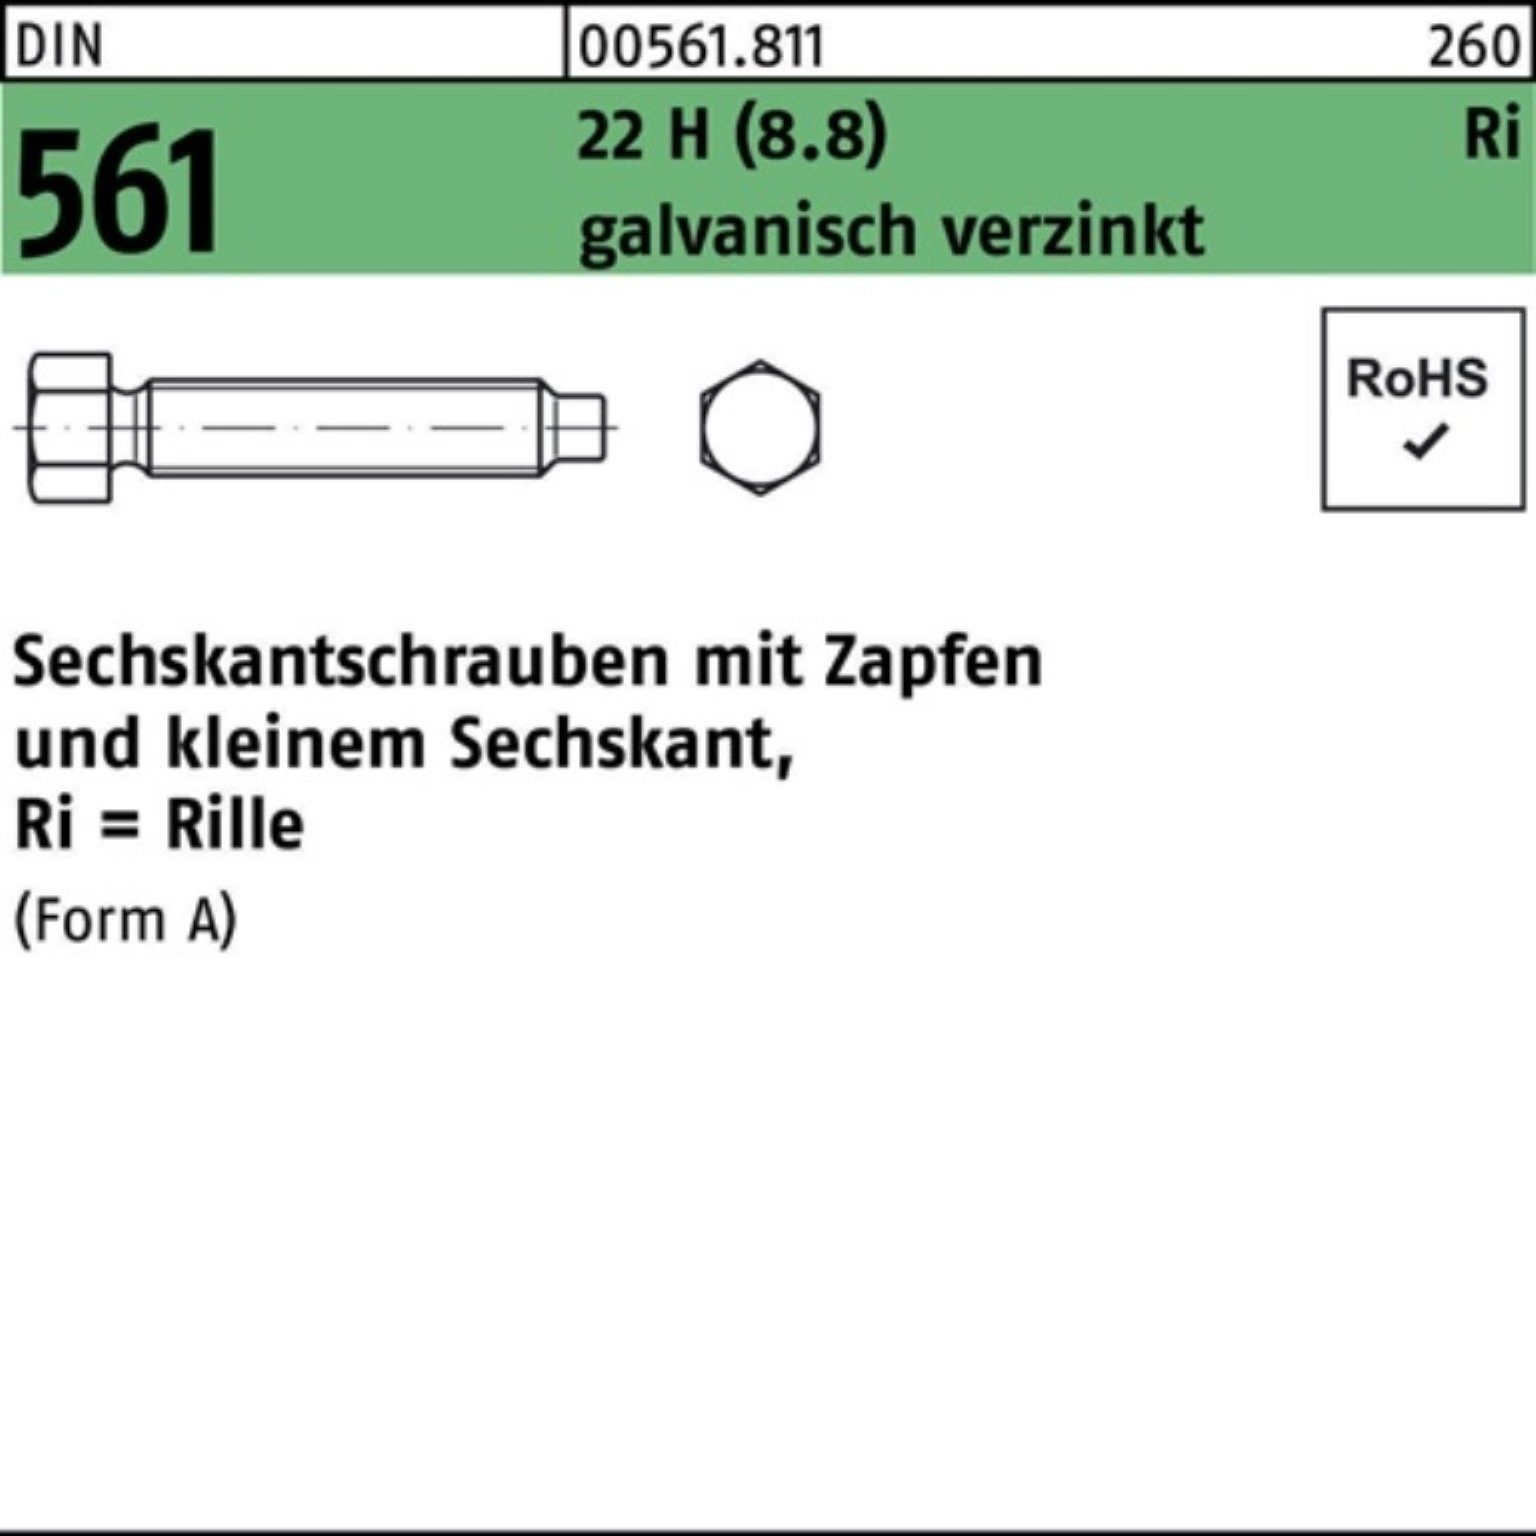 561 20x60 (8.8) H Sechskantschraube Pack AM 100er Zapfen Sechskantschraube Reyher galv.v 22 DIN